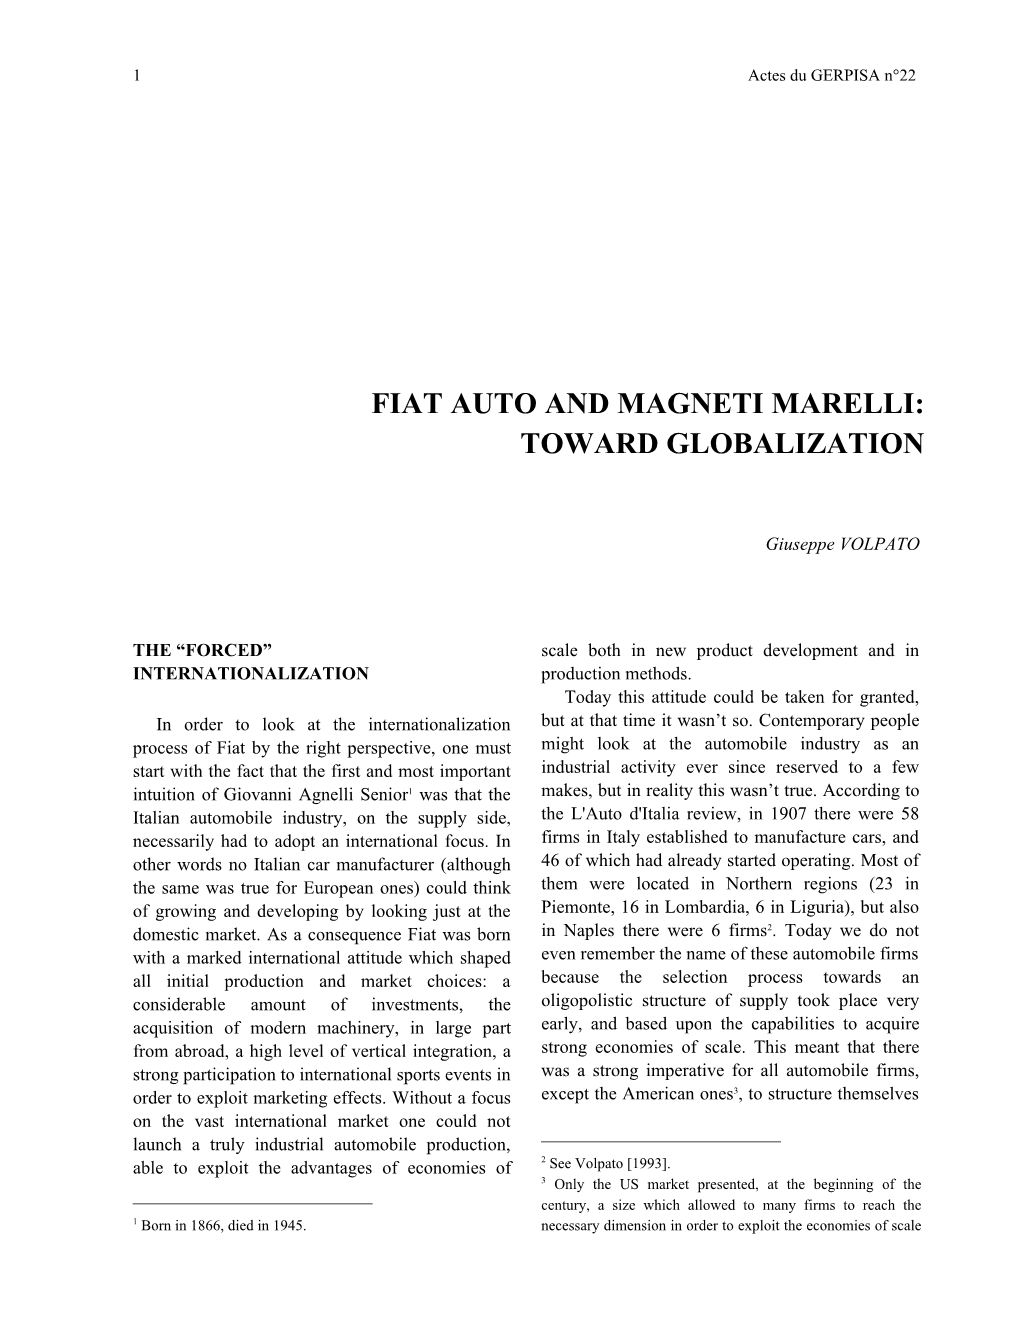 Fiat Auto and Magneti Marelli: Toward Globalization